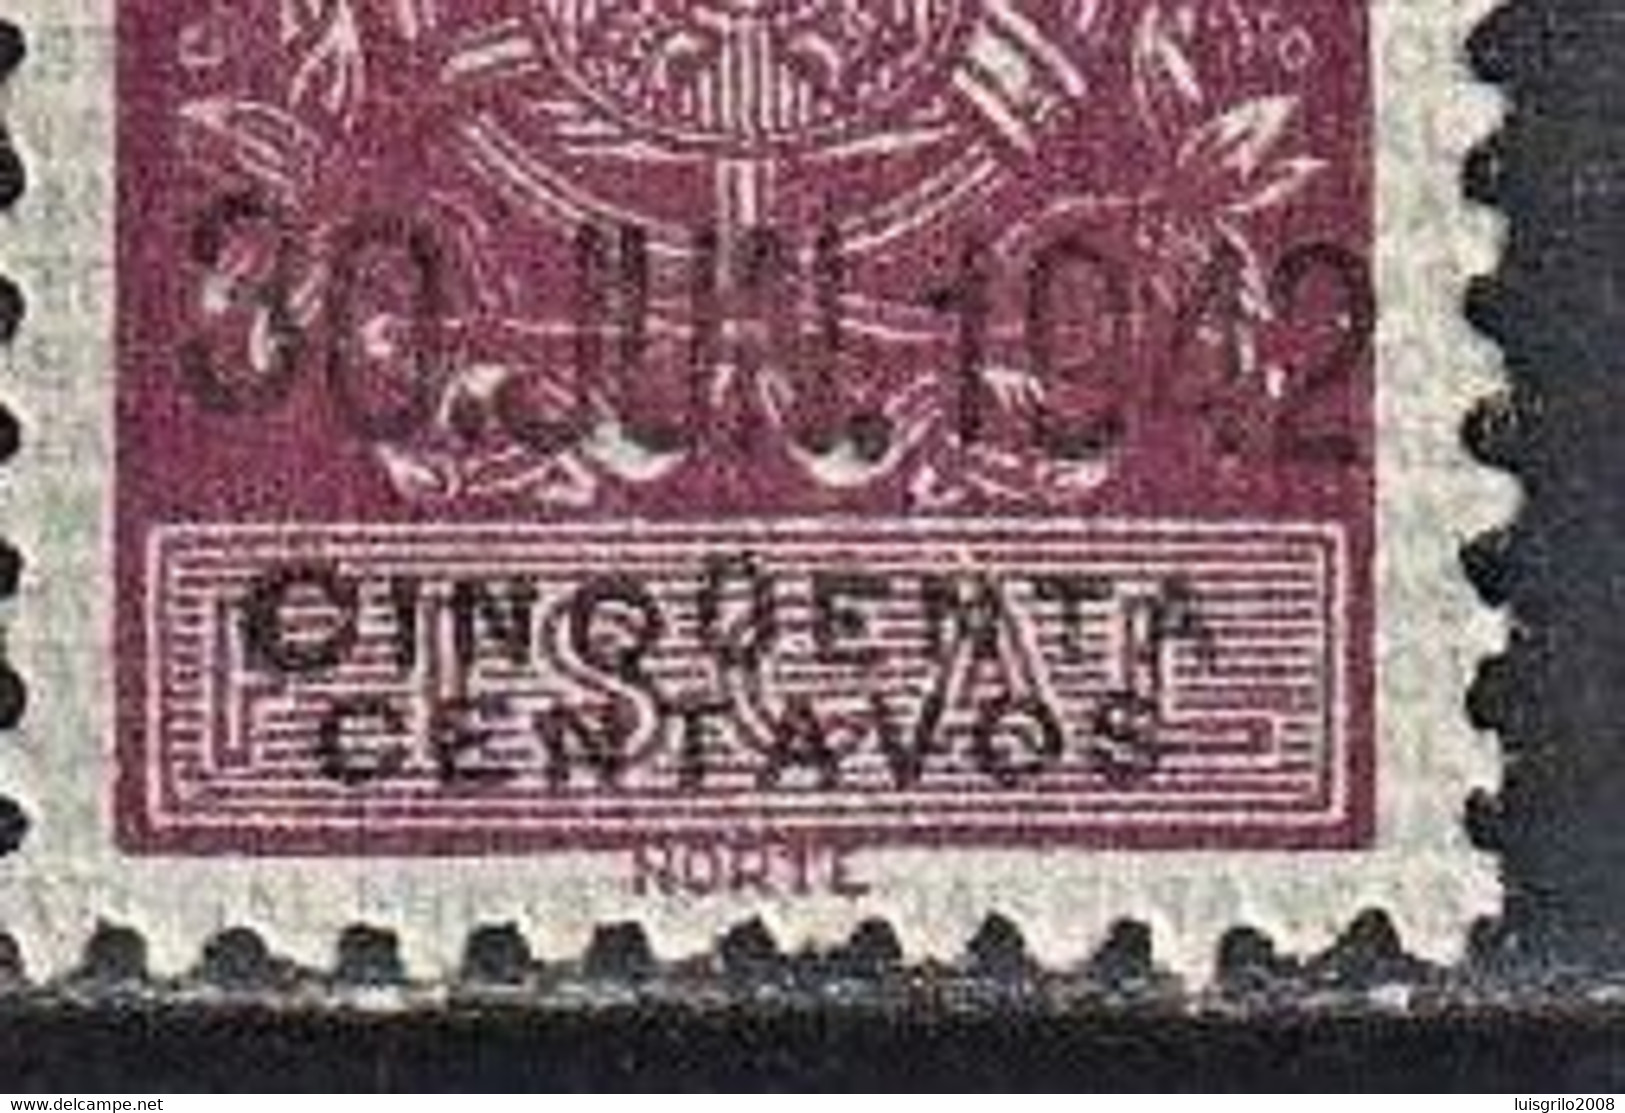 Fiscal/ Revenue, Portugal 1940 - Estampilha Fiscal -|- RARE STAMP - 0$50 Cinqüenta (Accents On The Letter U) - Gebruikt